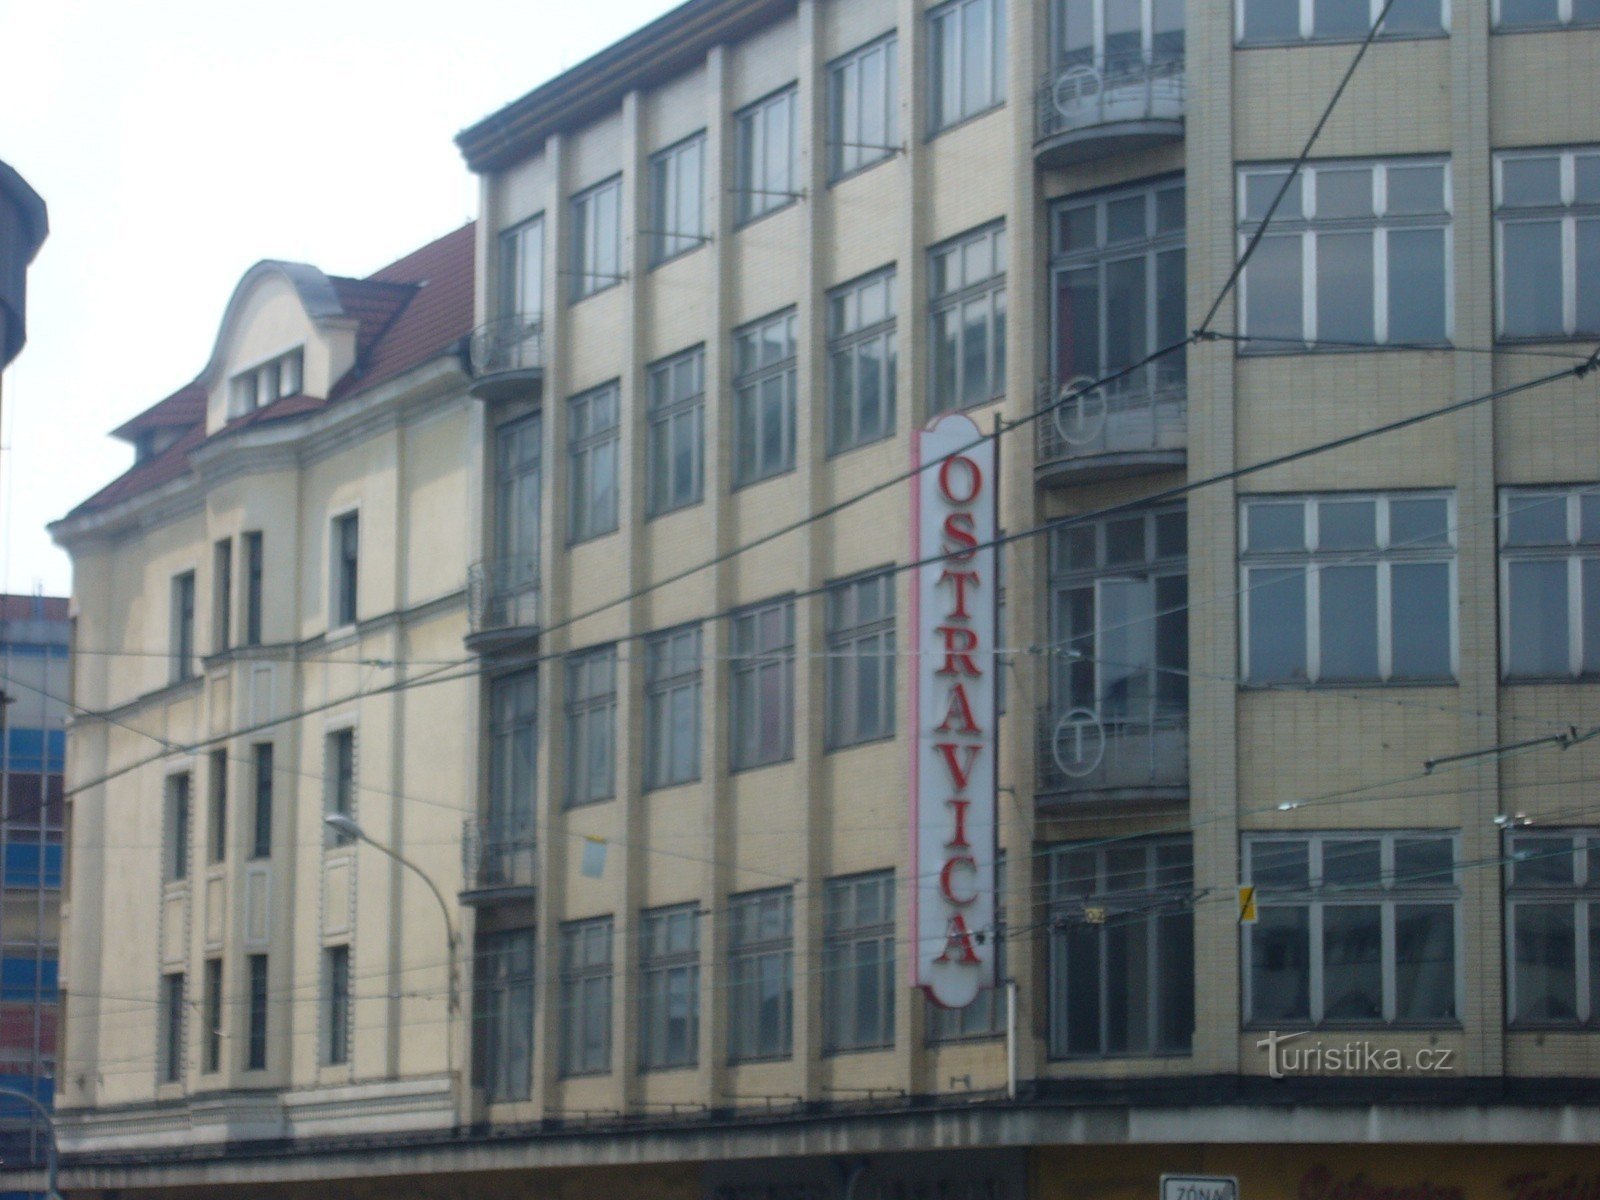 Ostrava - Trade house Textilia - Ostravica